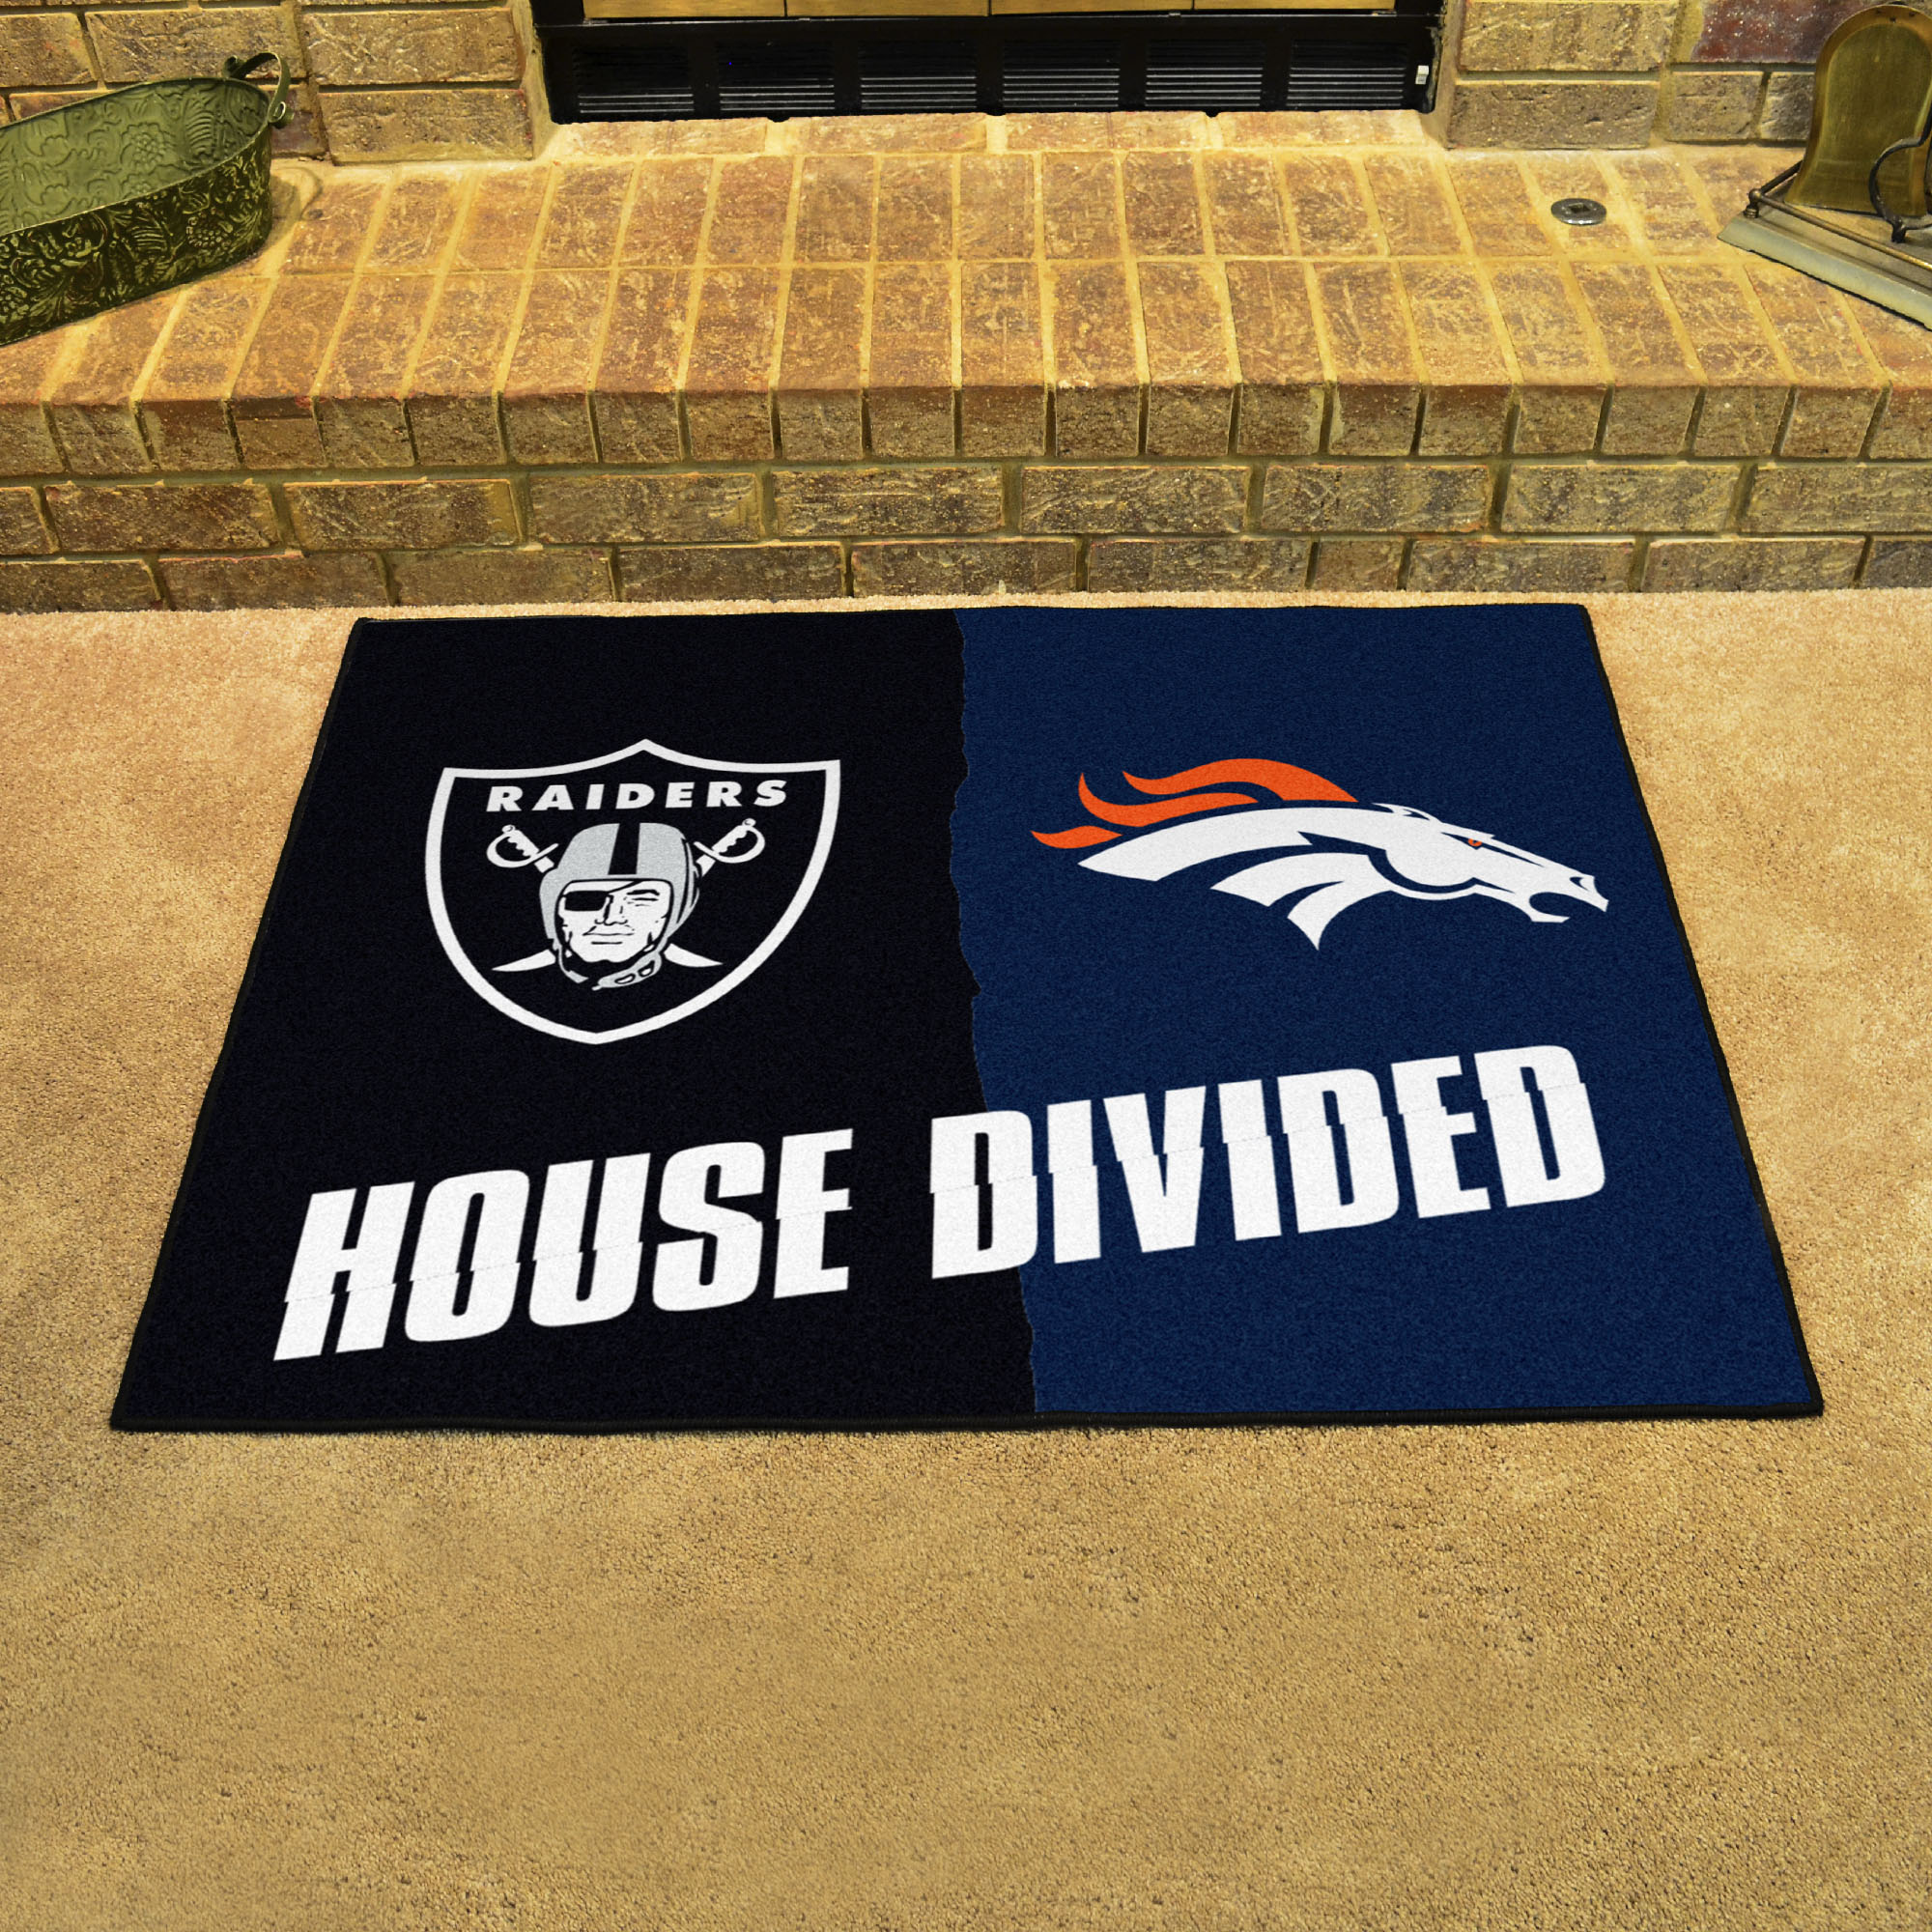 Broncos - Raiders House Divided Mat - 34 x 45